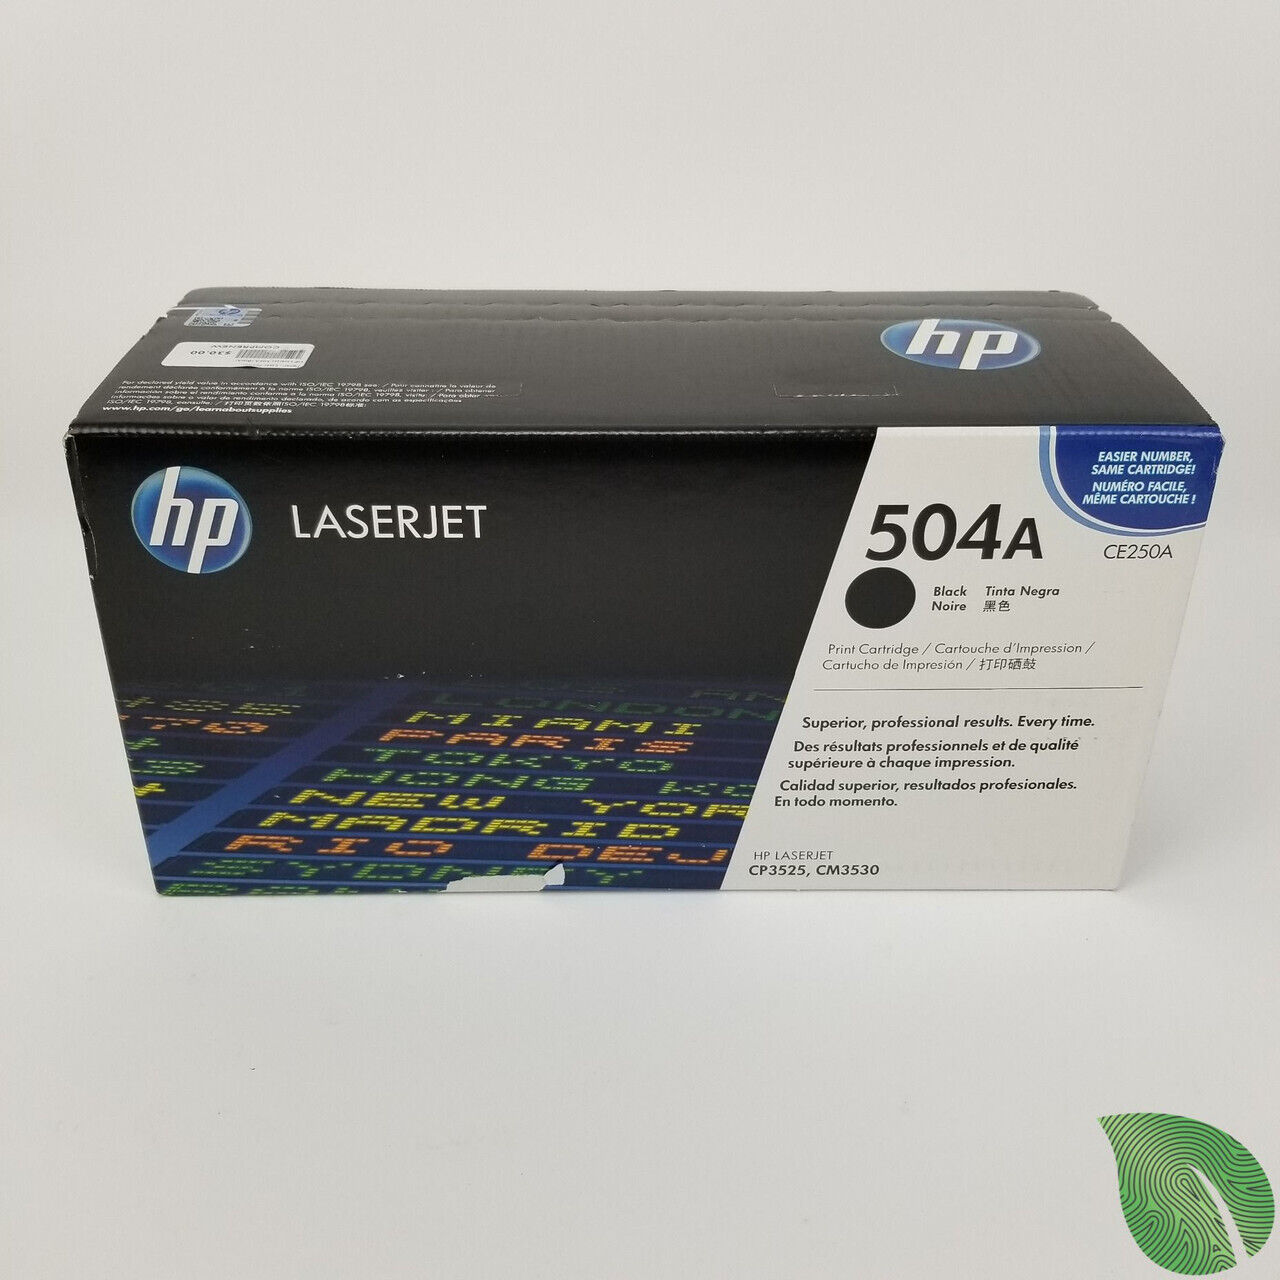 HP Laserjet 504A Black Laser Printer Cartridge | Grade A